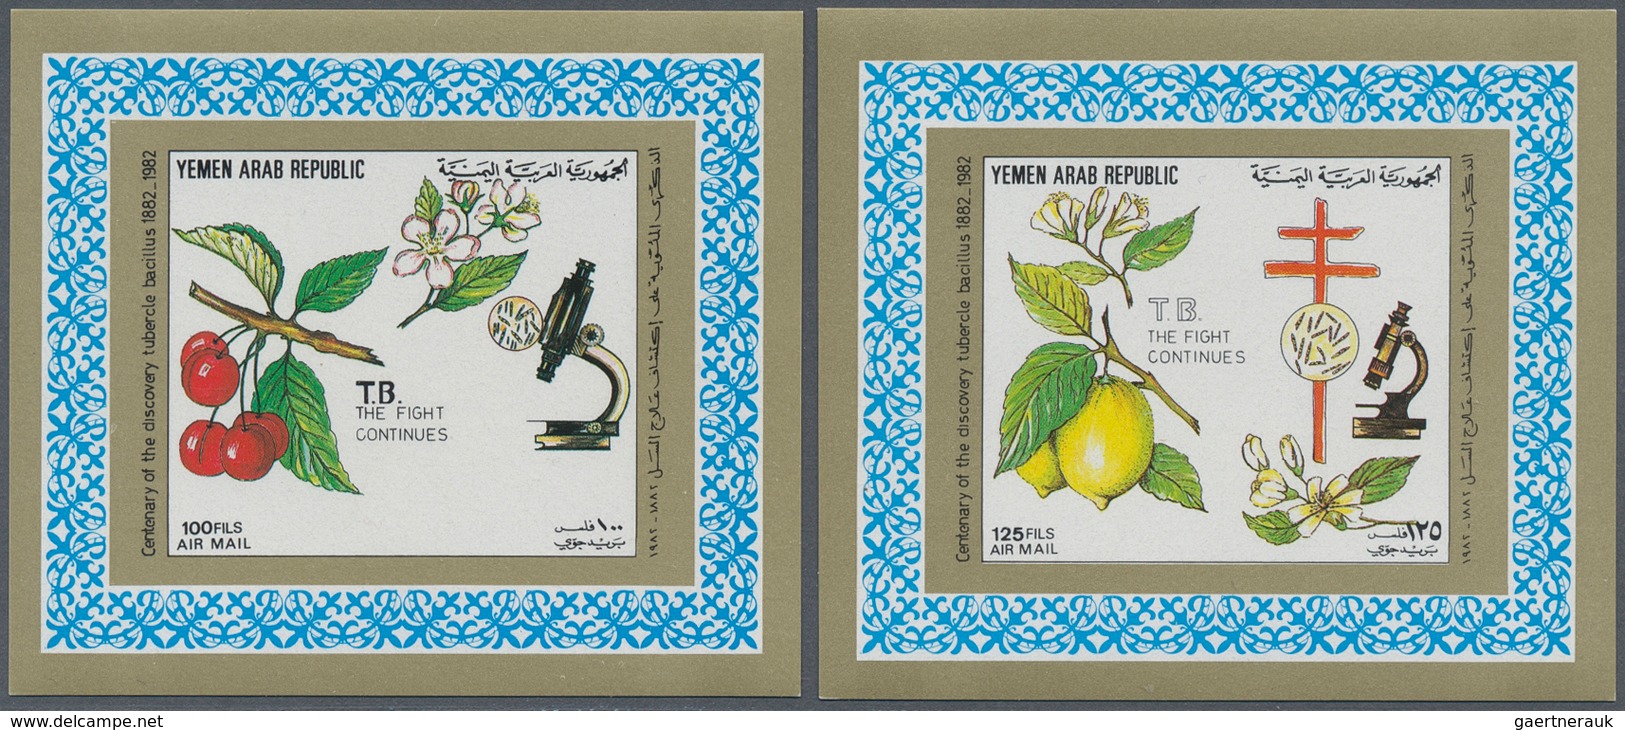 Jemen: 1961/1982, comprehensive MNH accumulation of sheets, souvenir sheets and especially de luxe s